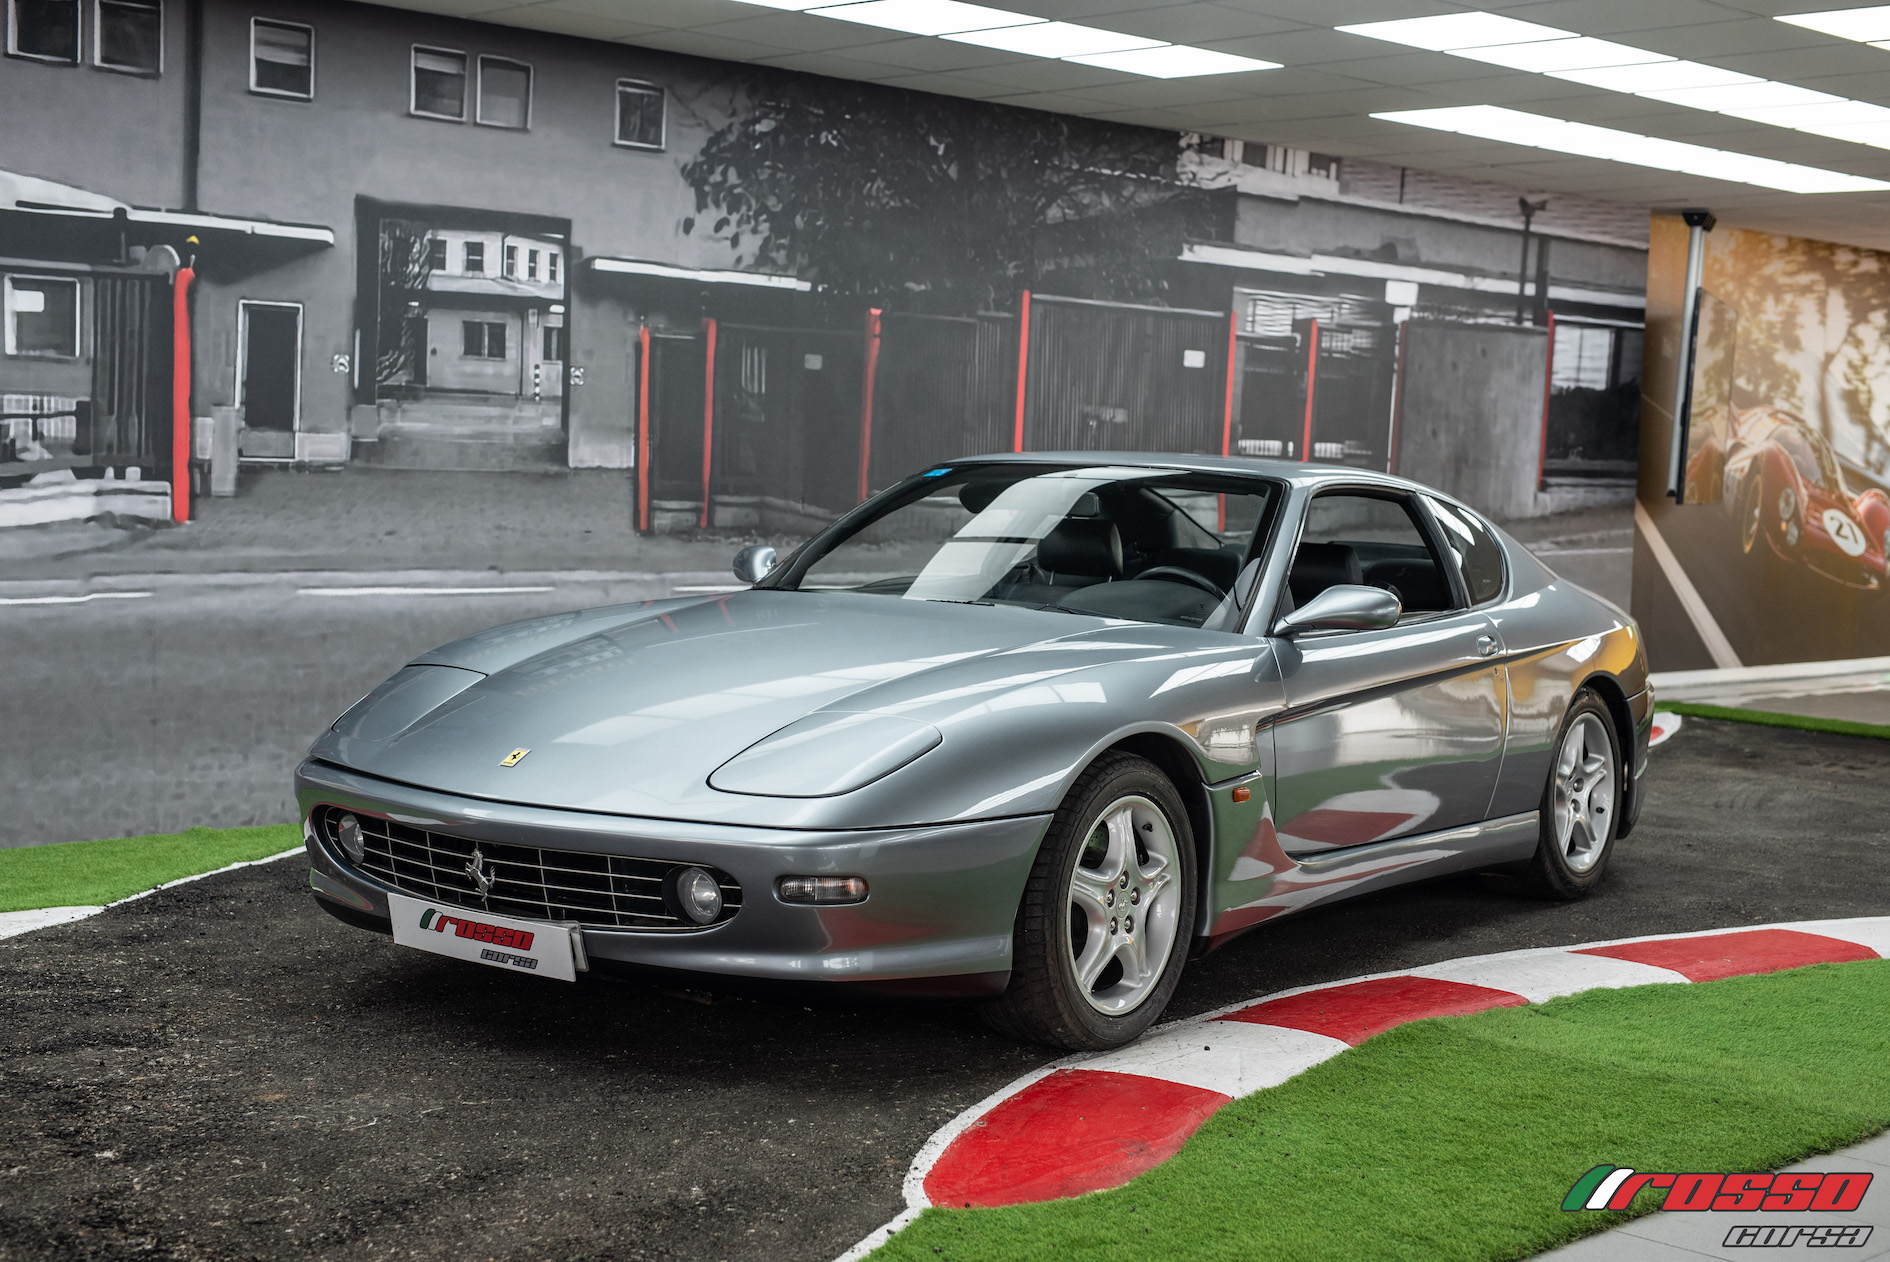 Classic silver grey Ferrari 456 FM GTA for sale